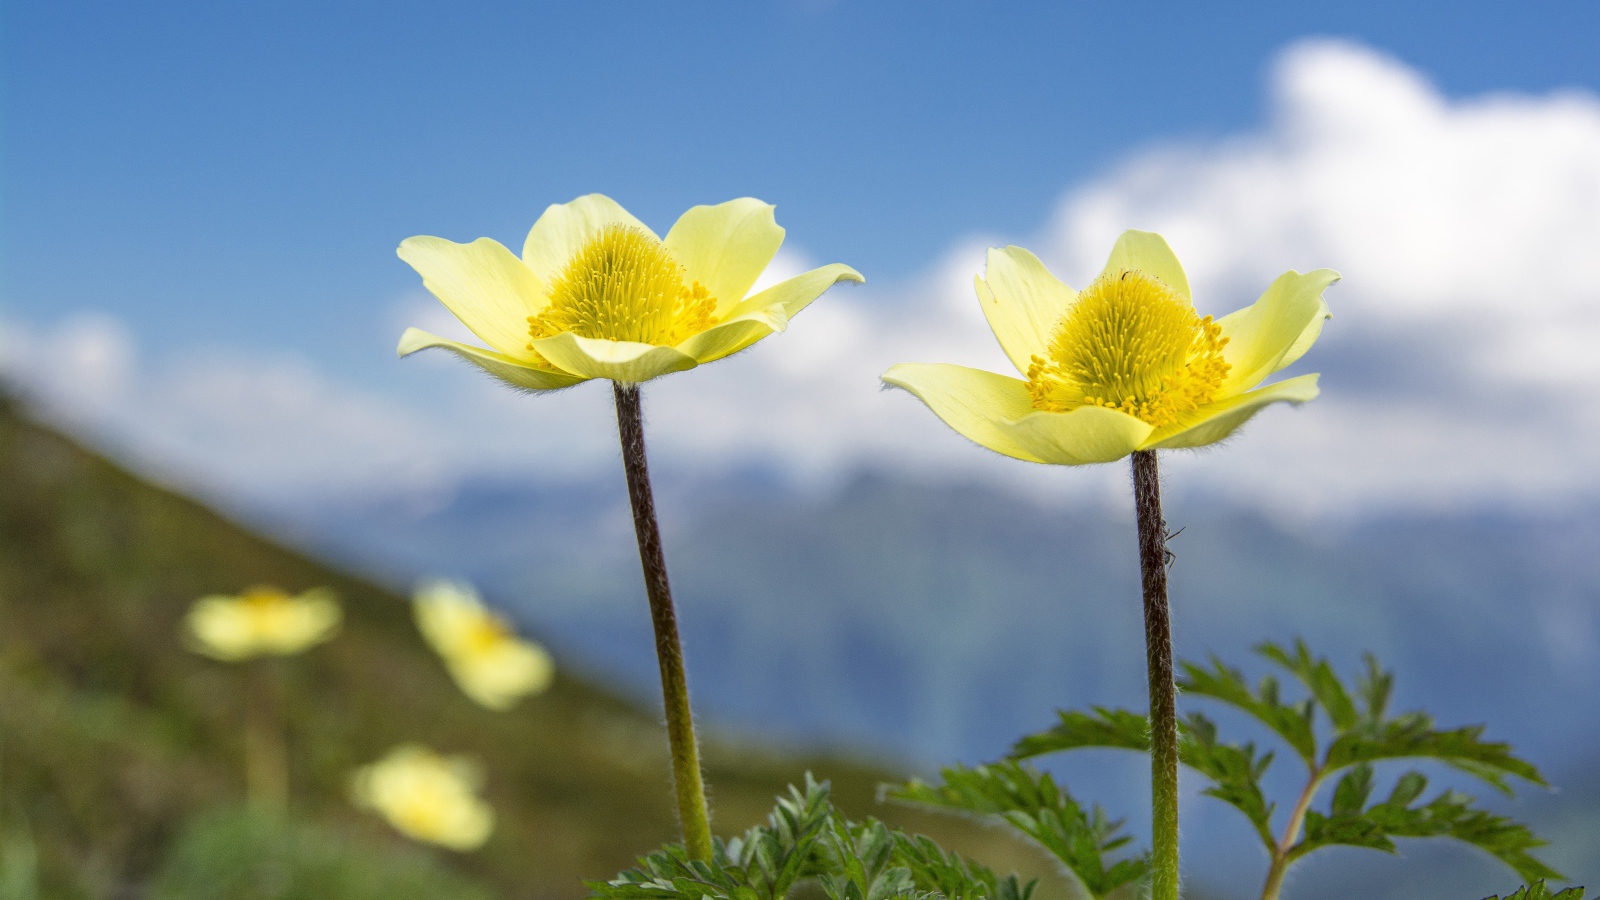 Два желтых цветка анемоны на поле крупным планом